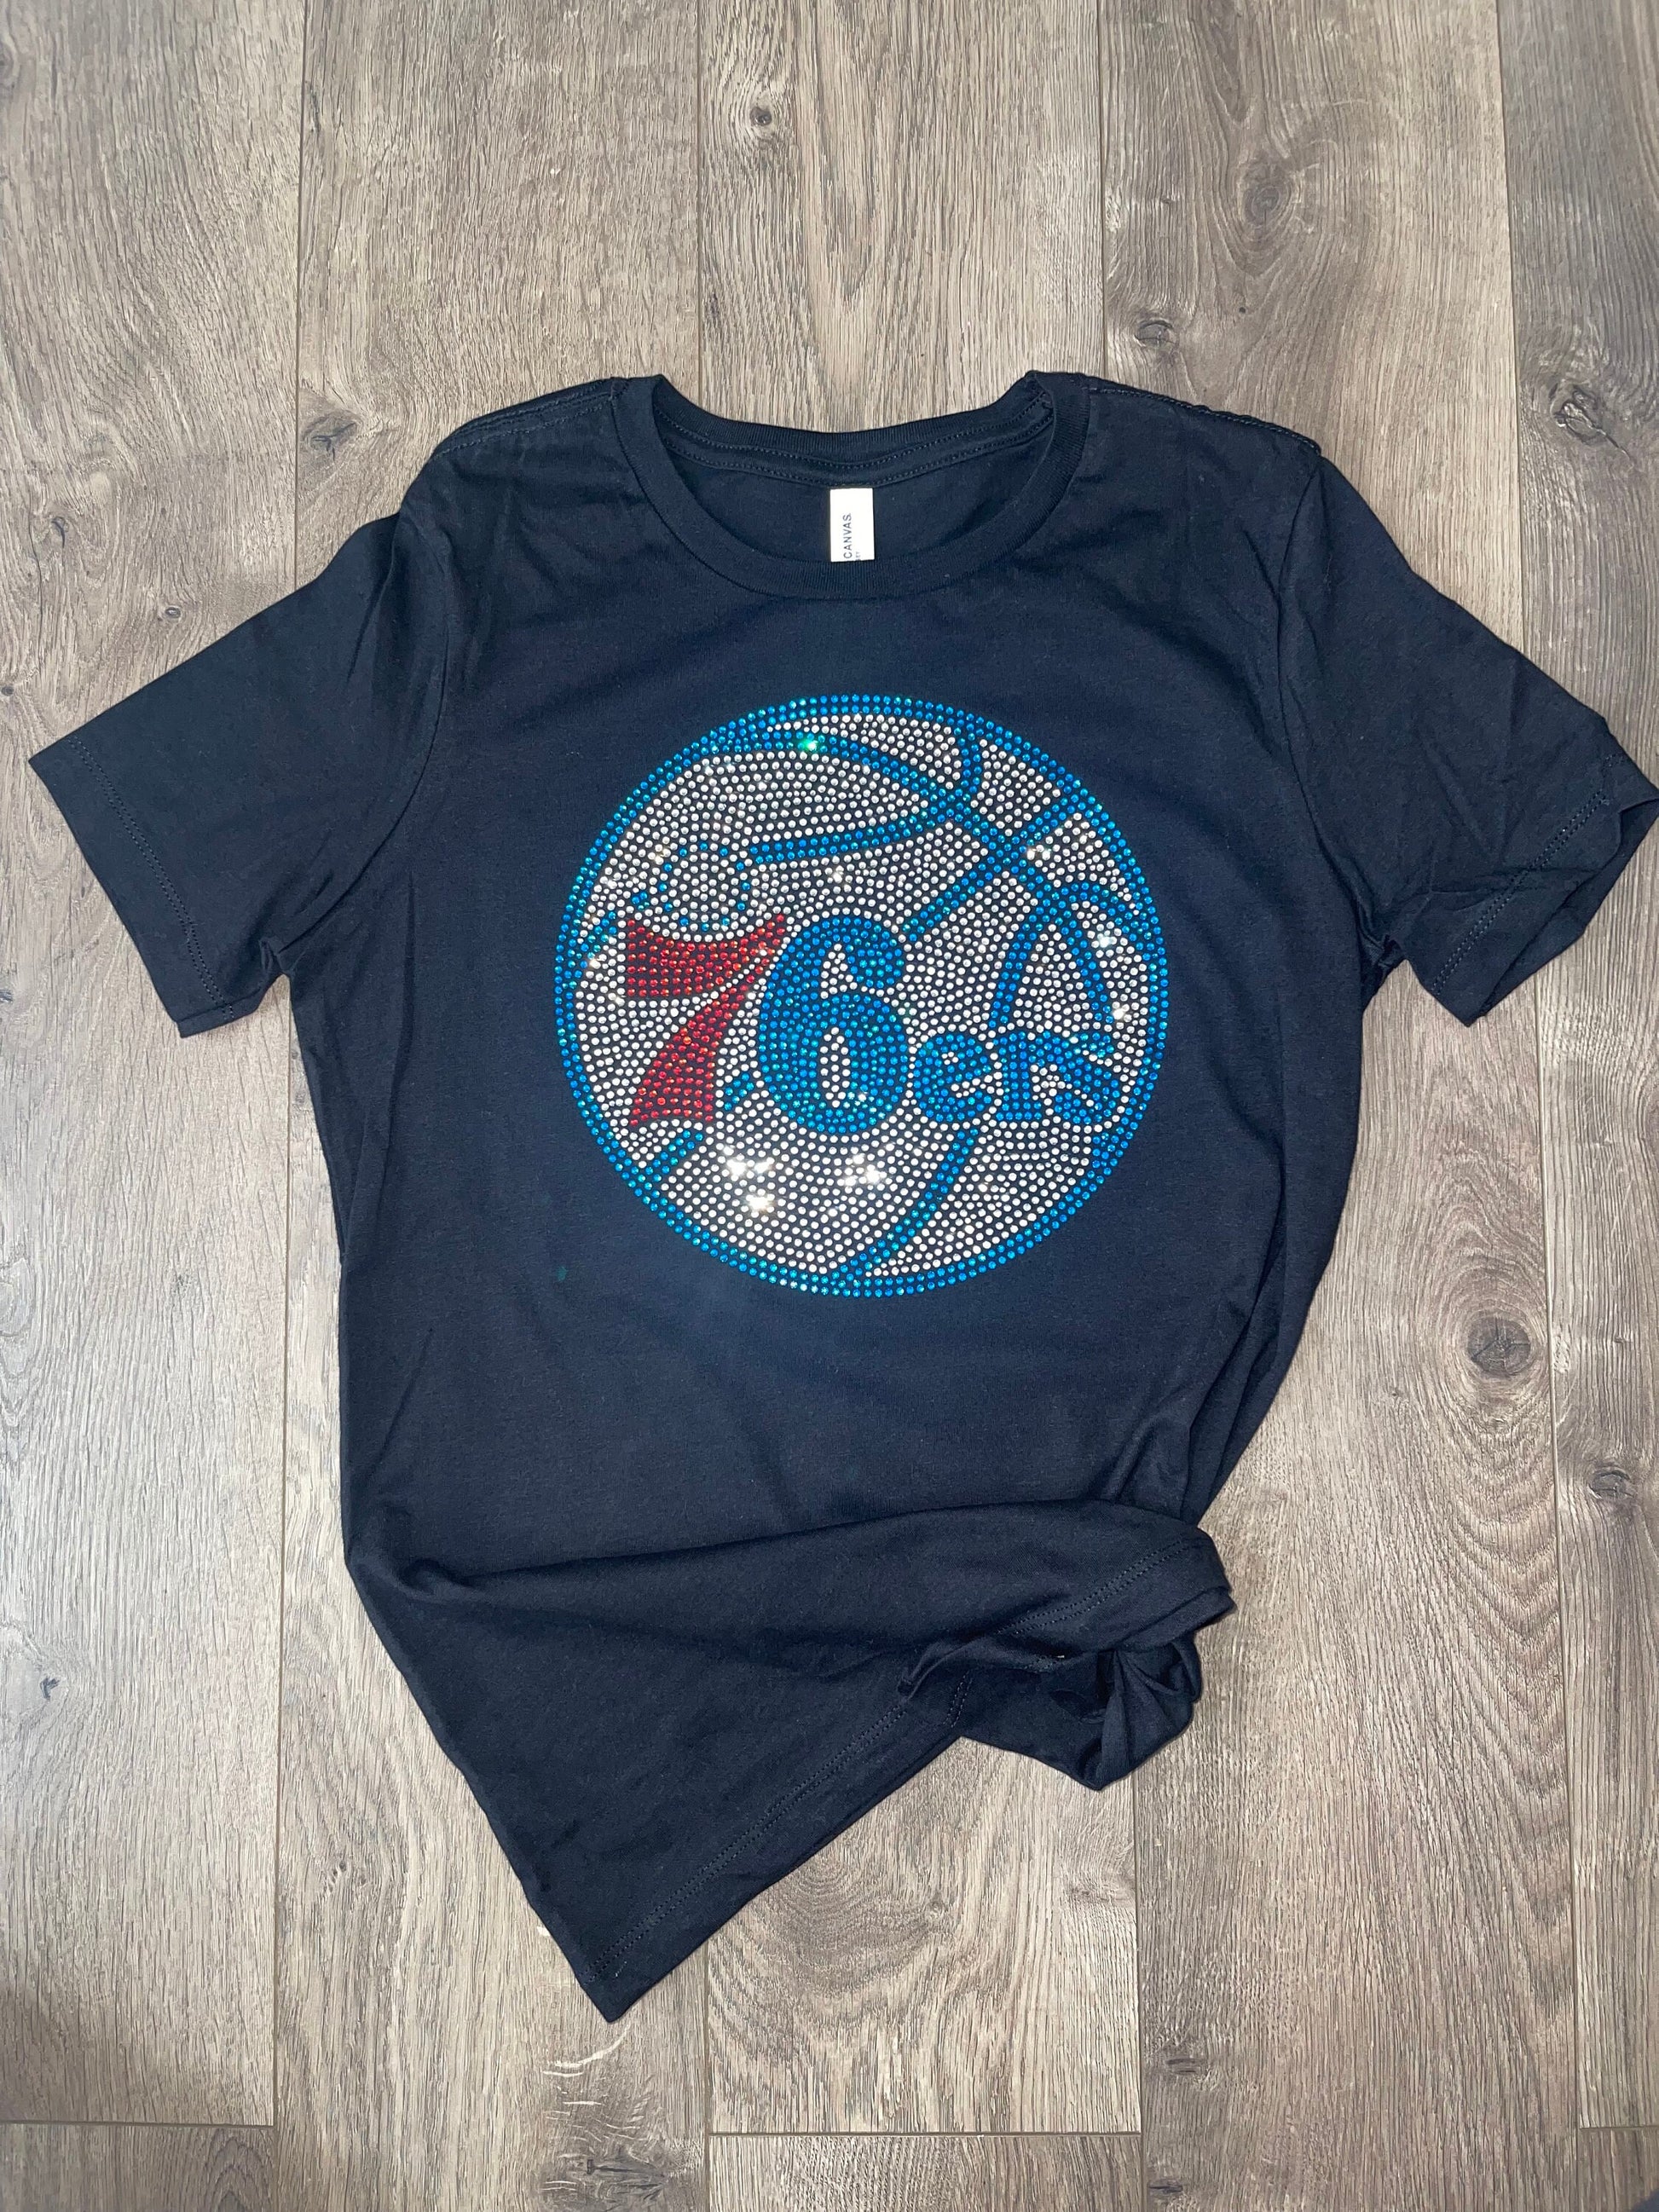 76ERs Rhinestone Shirt, Basketball Bling shirt, Rhinestone Shirt